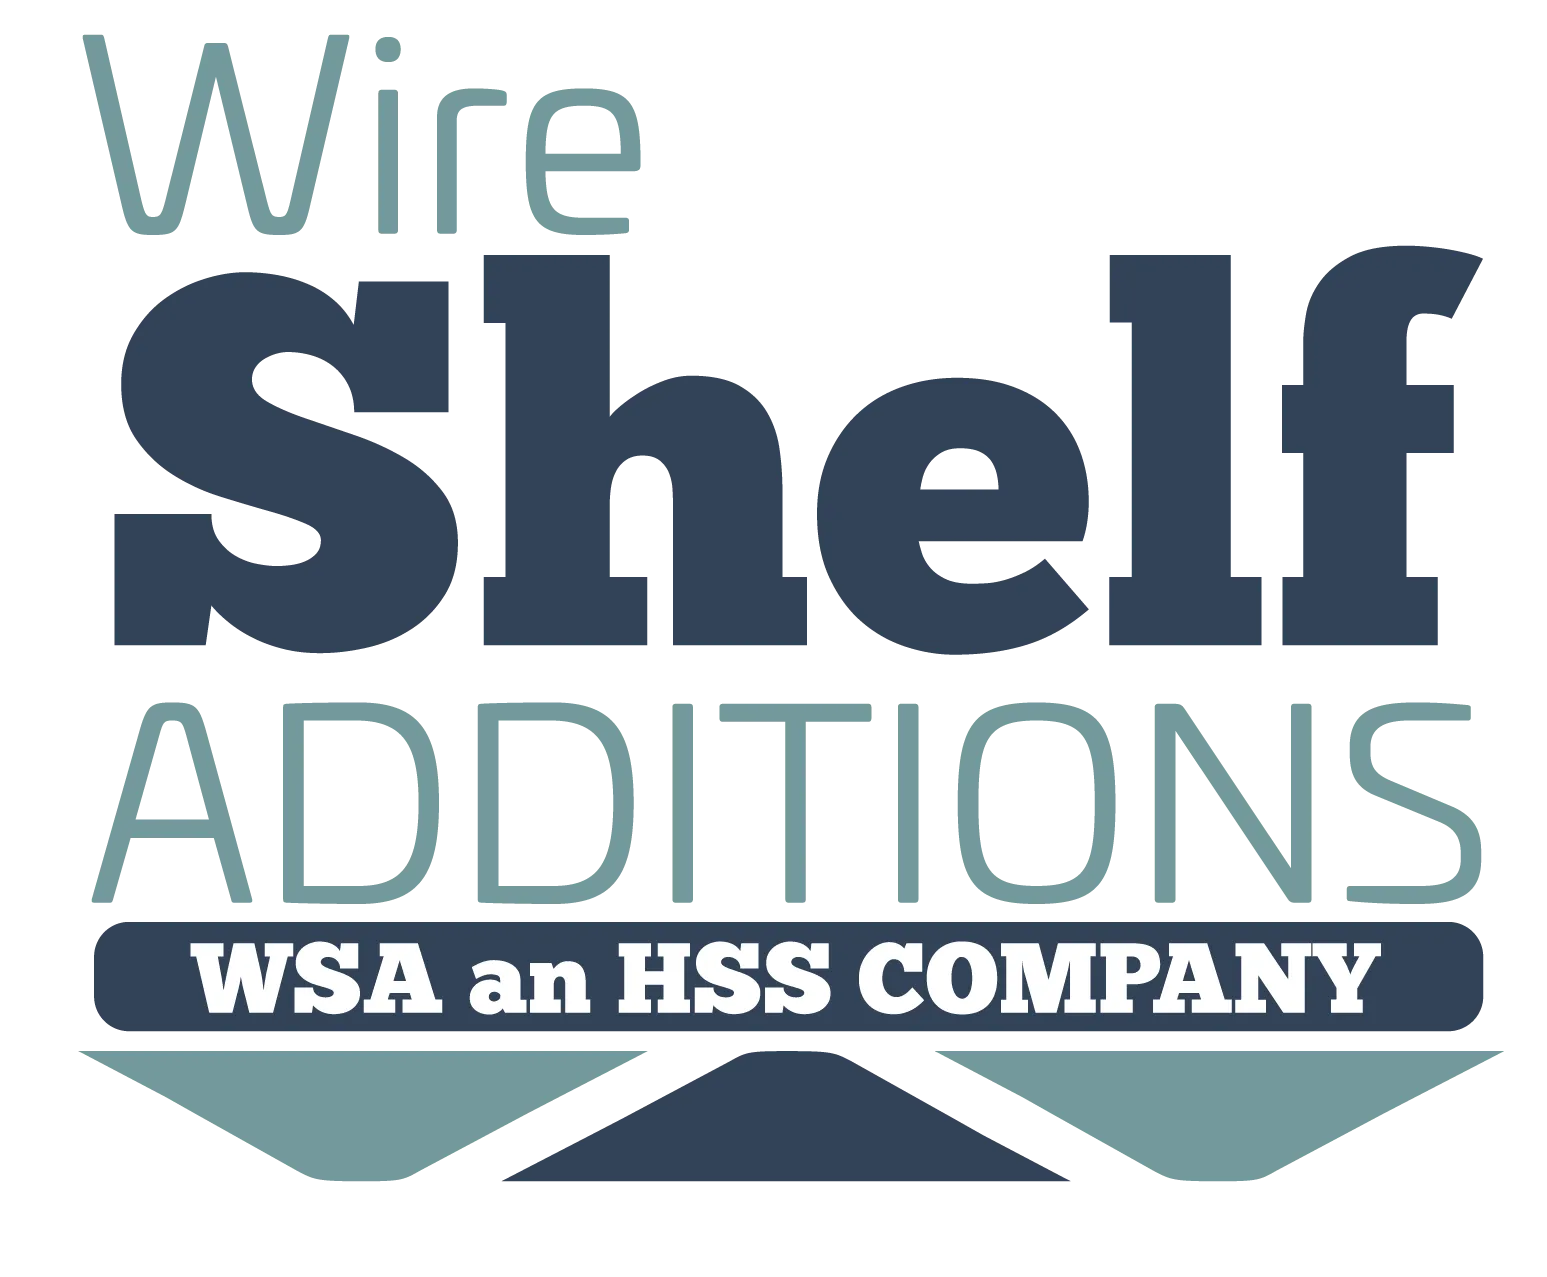 Wire Shelf Additions